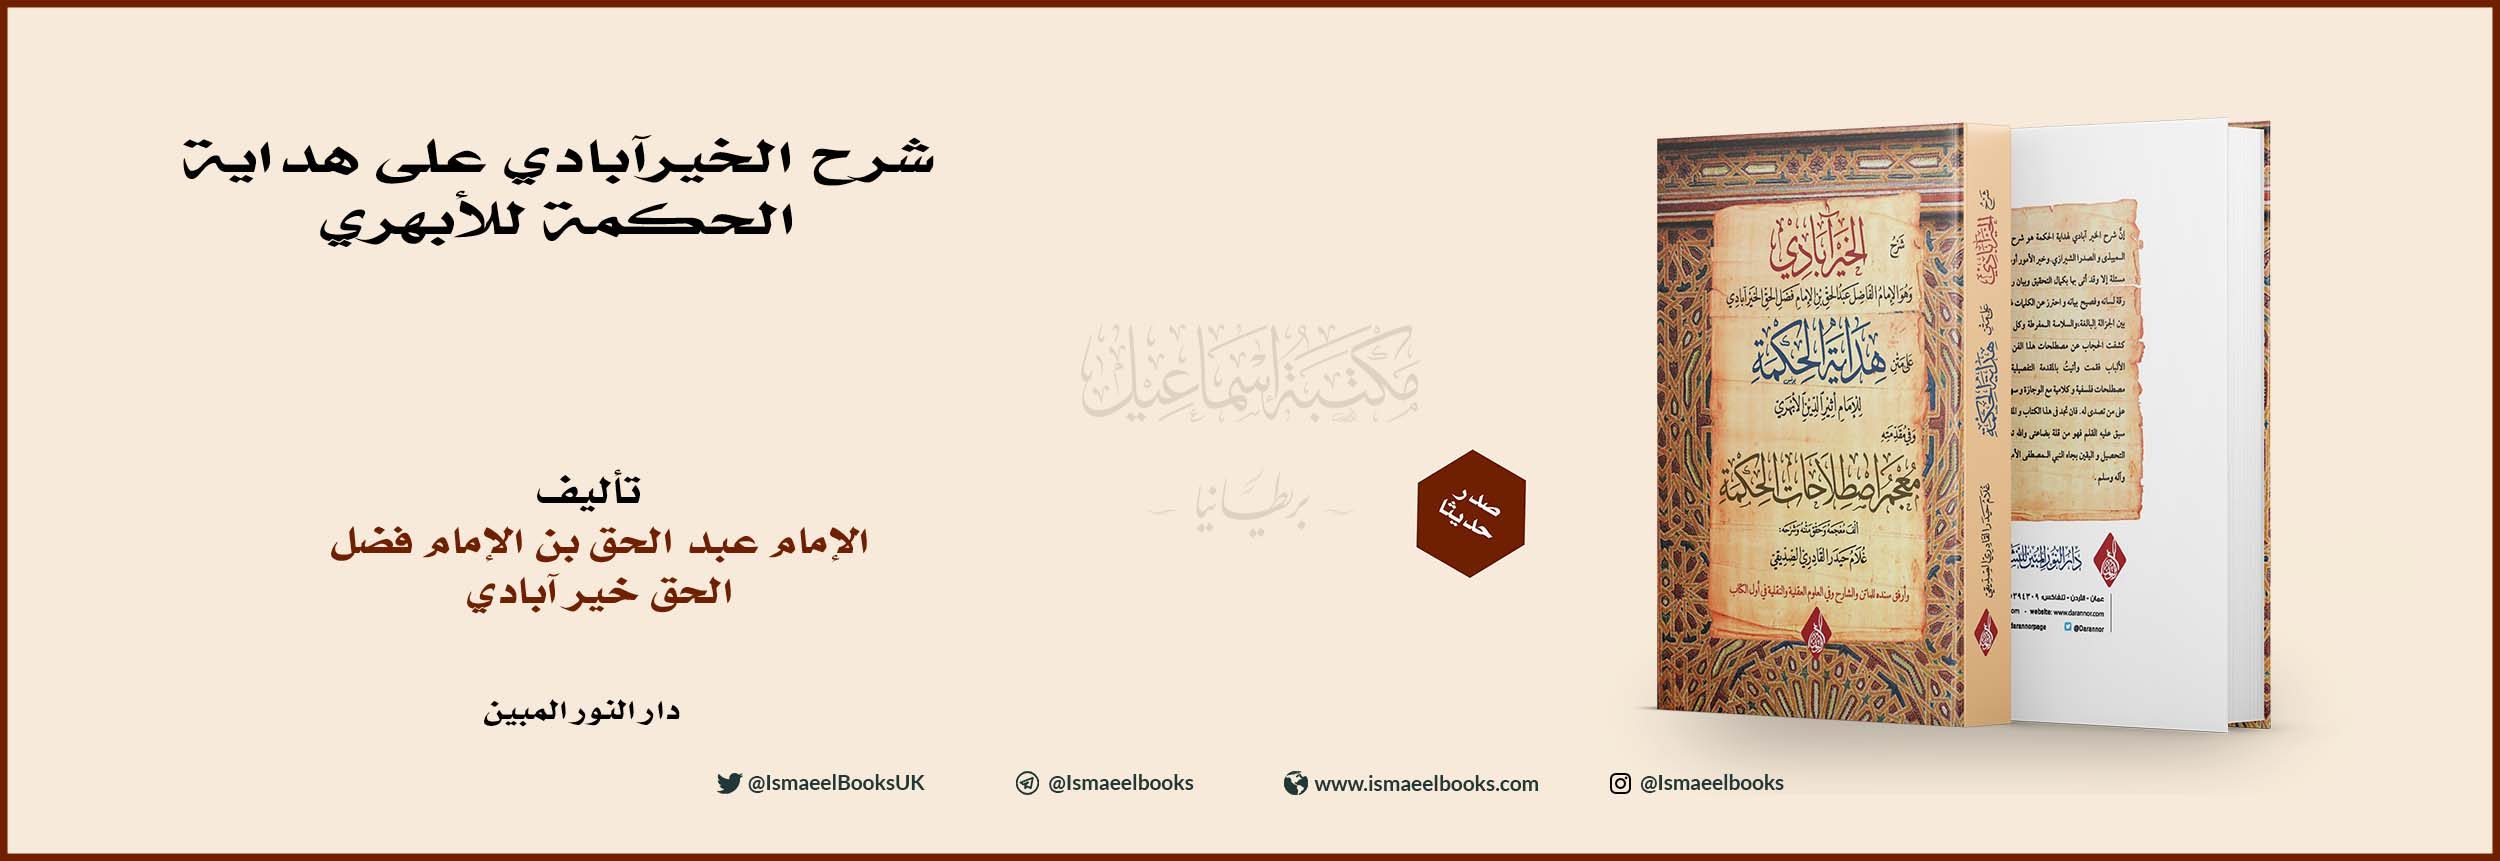 book banner-arabic@0.5x